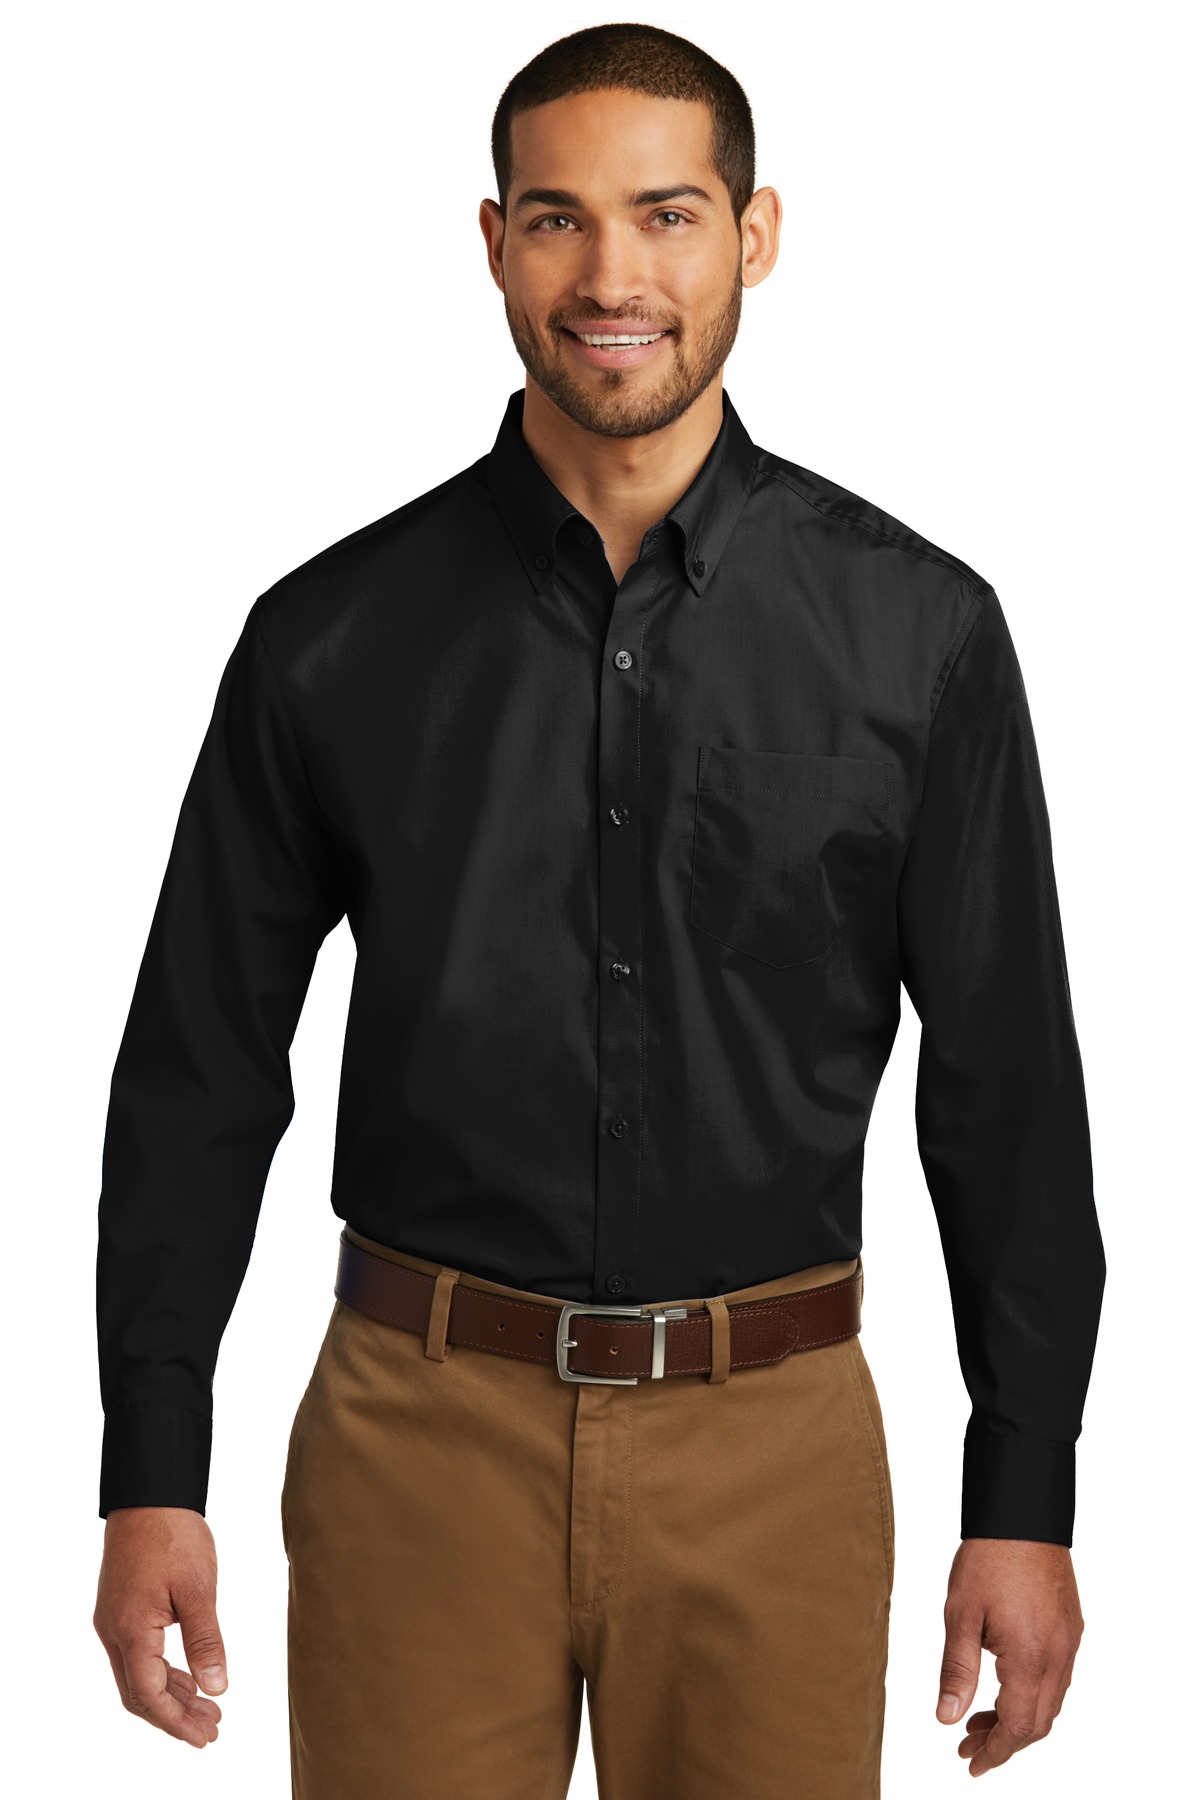 Port Authority Woven Shirts for Hospitality ® Long Sleeve Carefree Poplin Shirt.-Port Authority